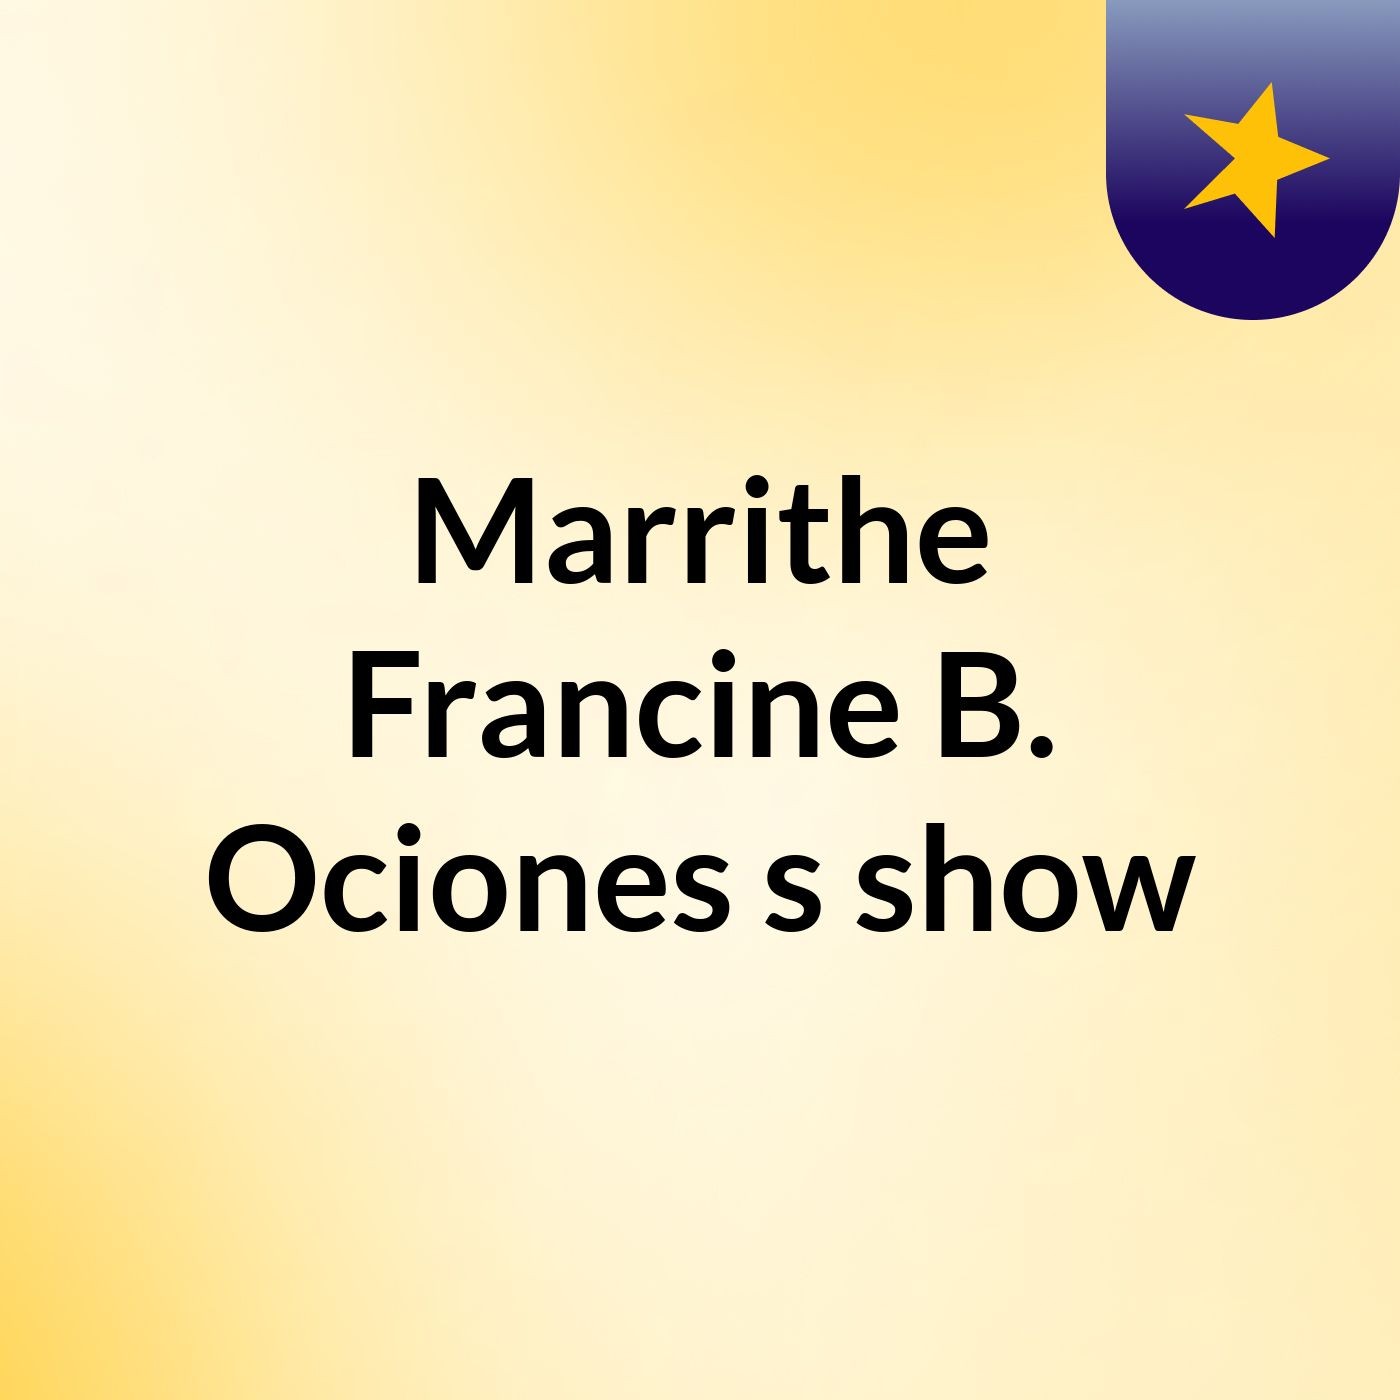 Marrithe Francine B. Ociones's show